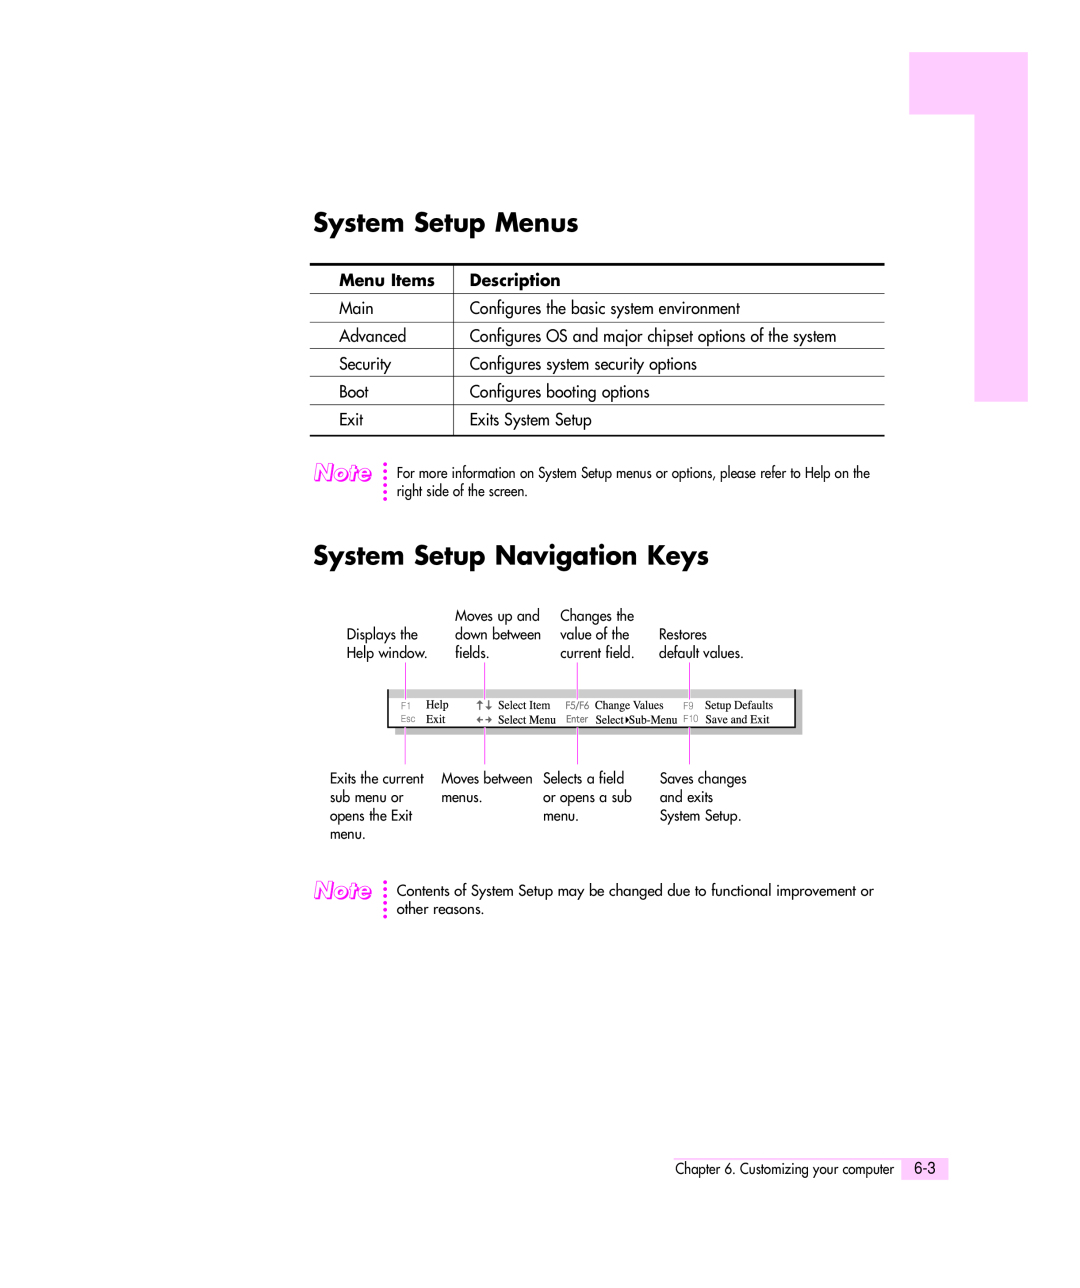 Samsung Q35 manual System Setup Menus, System Setup Navigation Keys, Menu Items, Description, Main, Advanced, Boot, Exit 